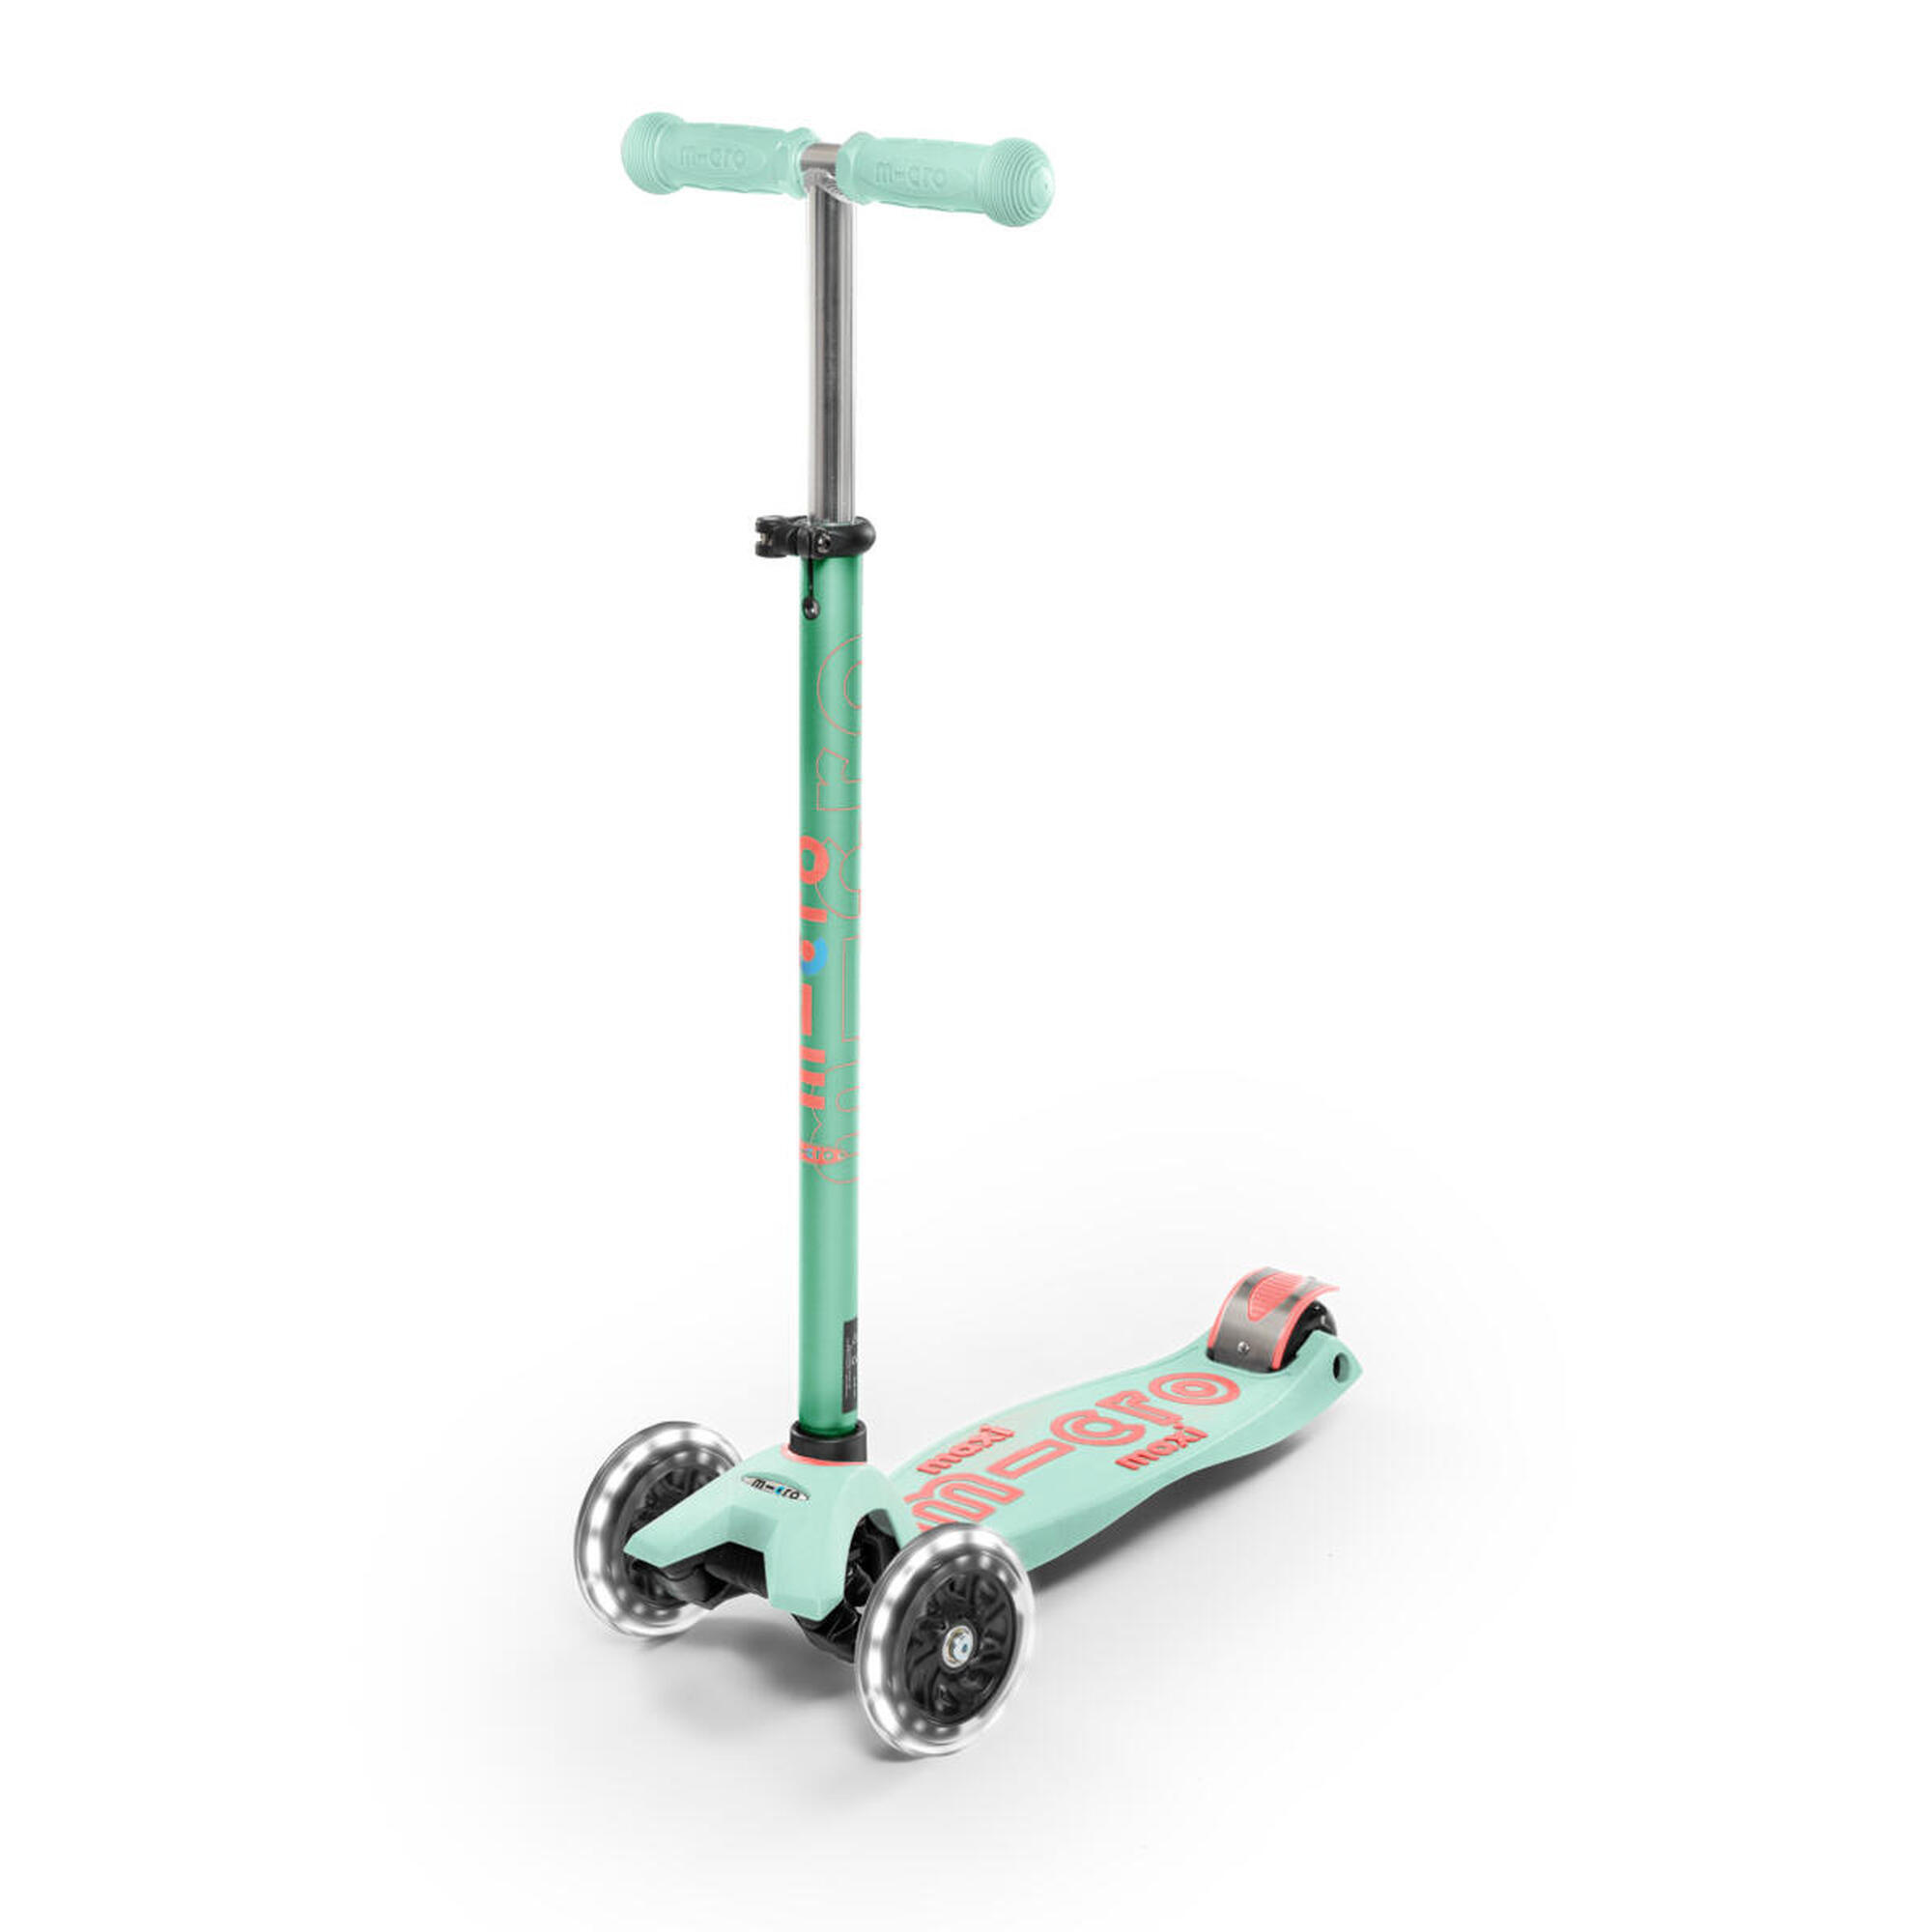 Maxi Scooter - Light up Wheels: Mint 1/7